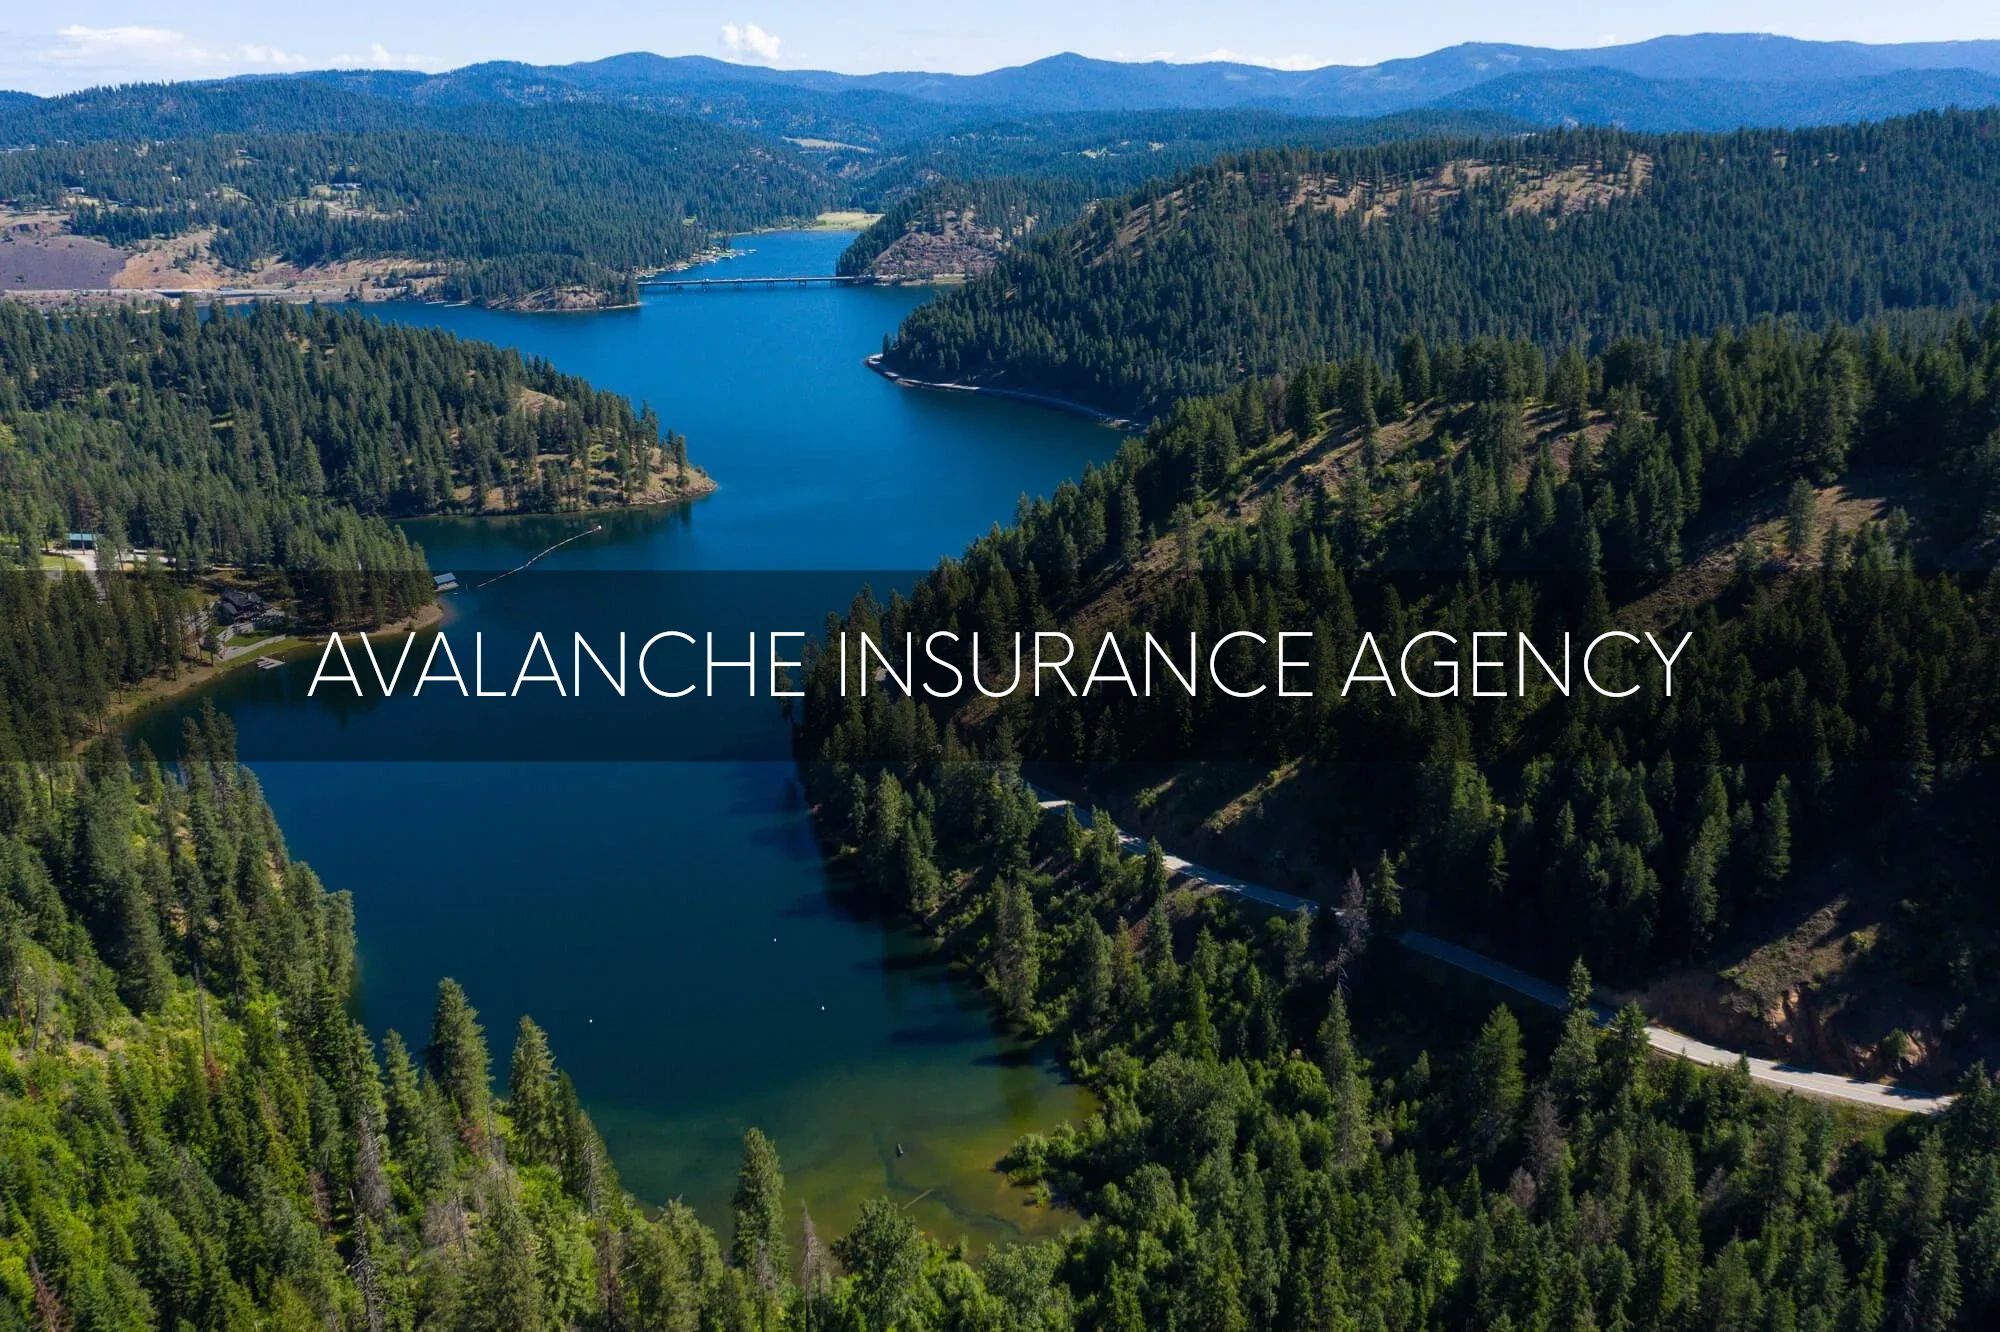 (c) Avalanche-insurance.com